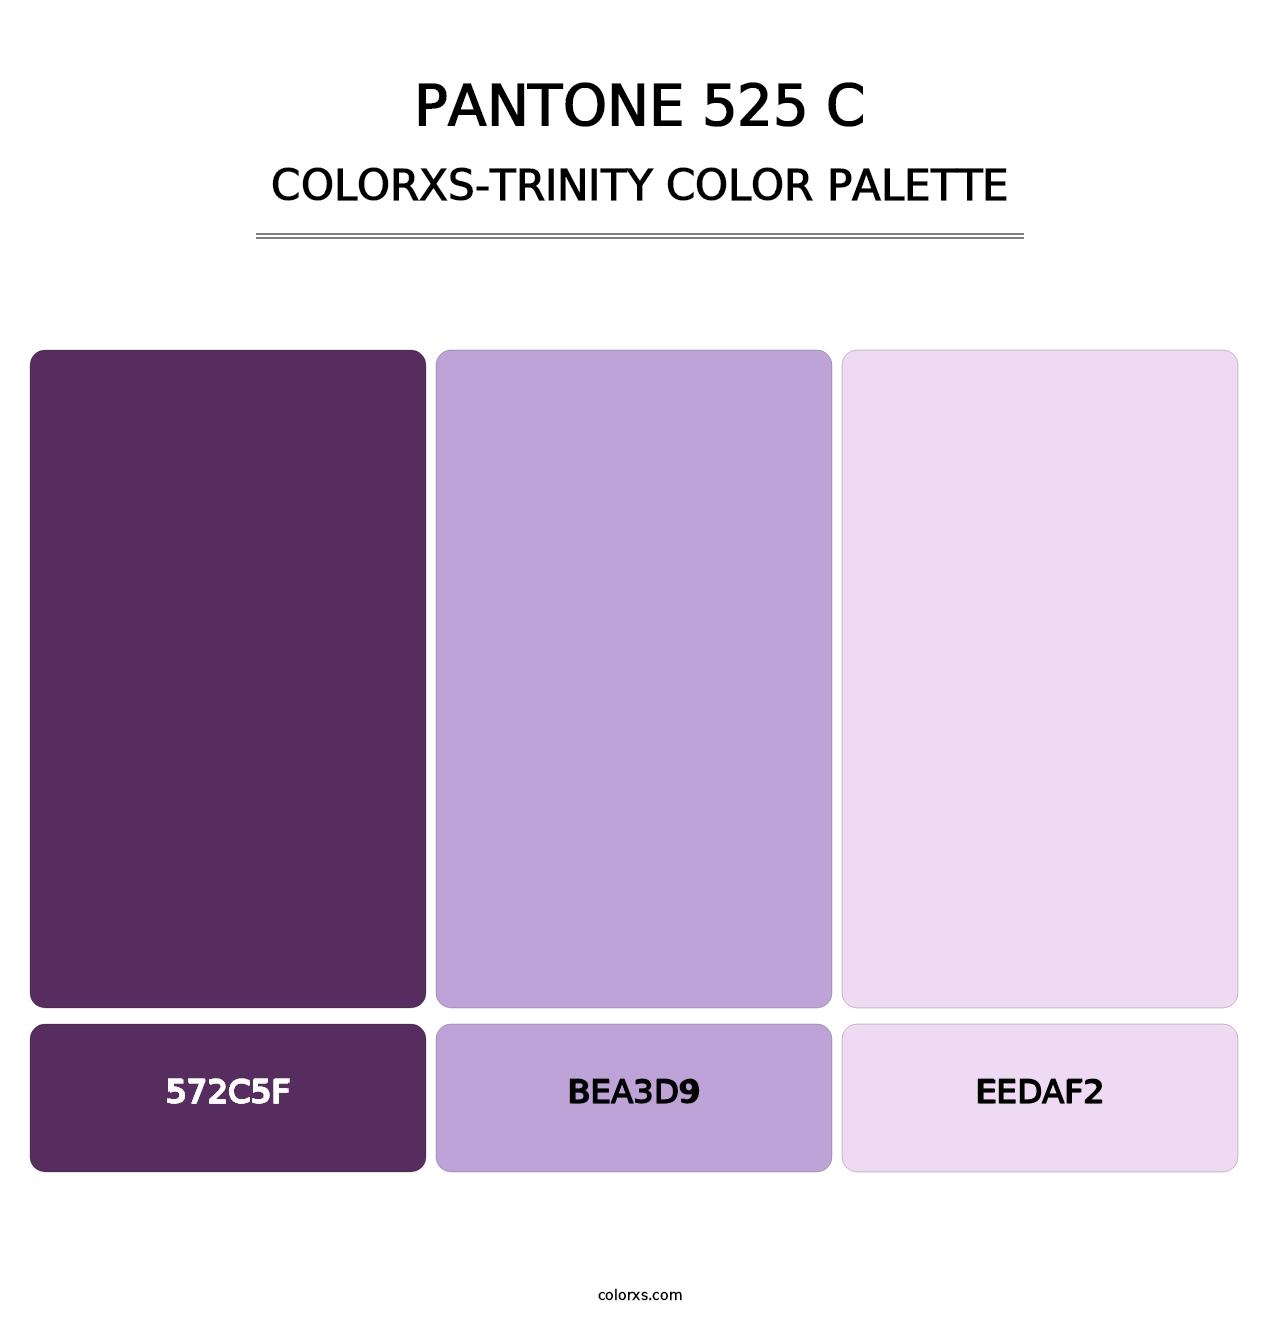 PANTONE 525 C - Colorxs Trinity Palette